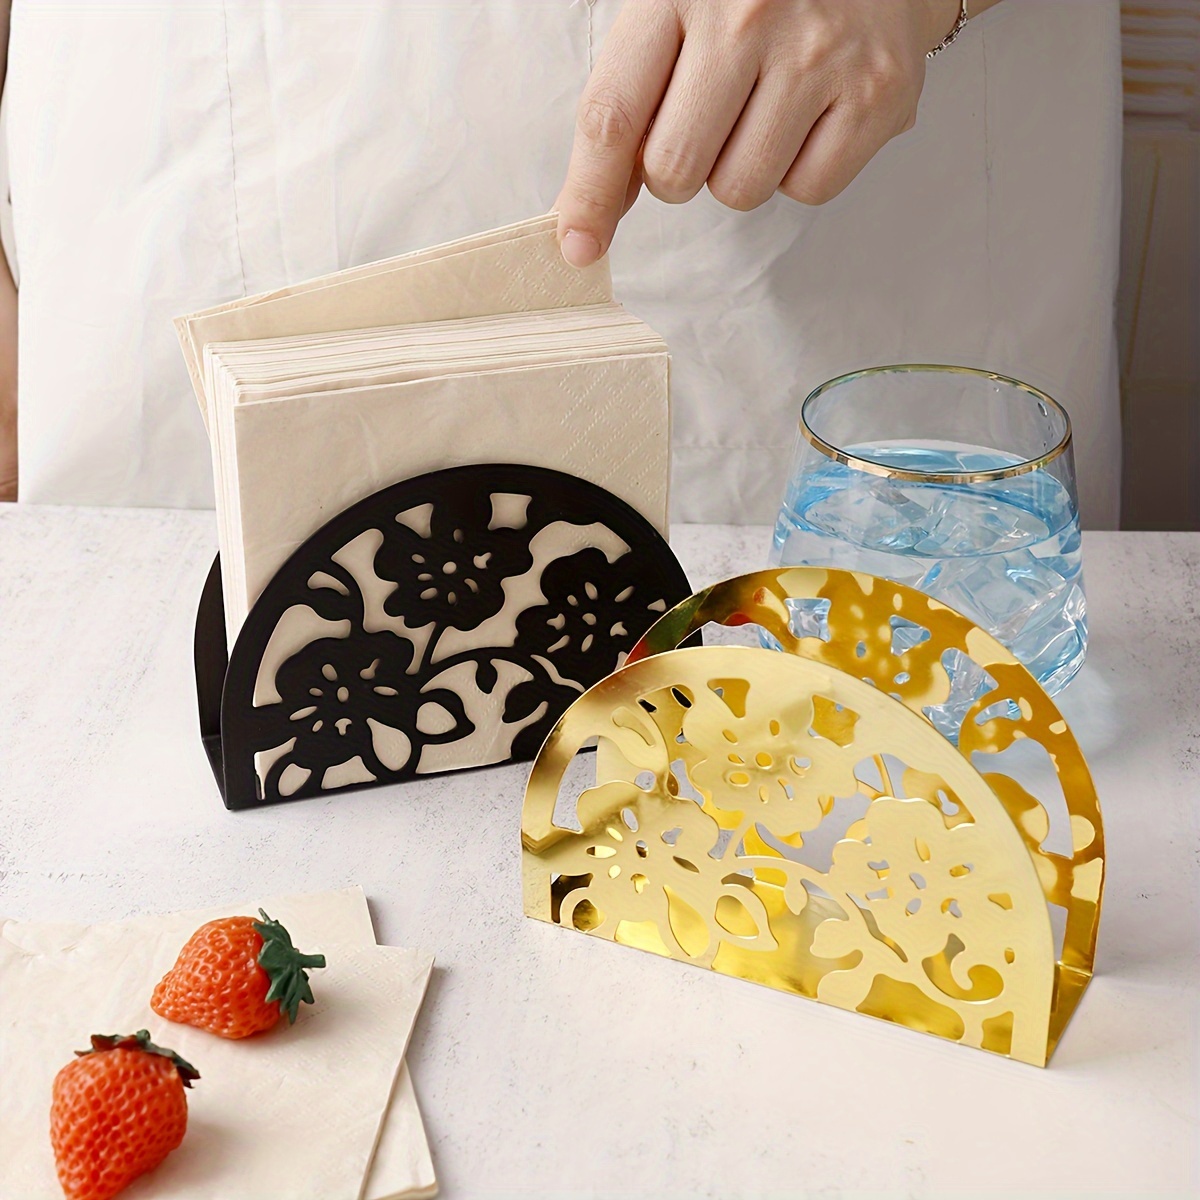 

Elegant Metal Napkin Holder - Semi-circular, Lace-design For Dining & Kitchen Decor, Ideal For Restaurants & Bars